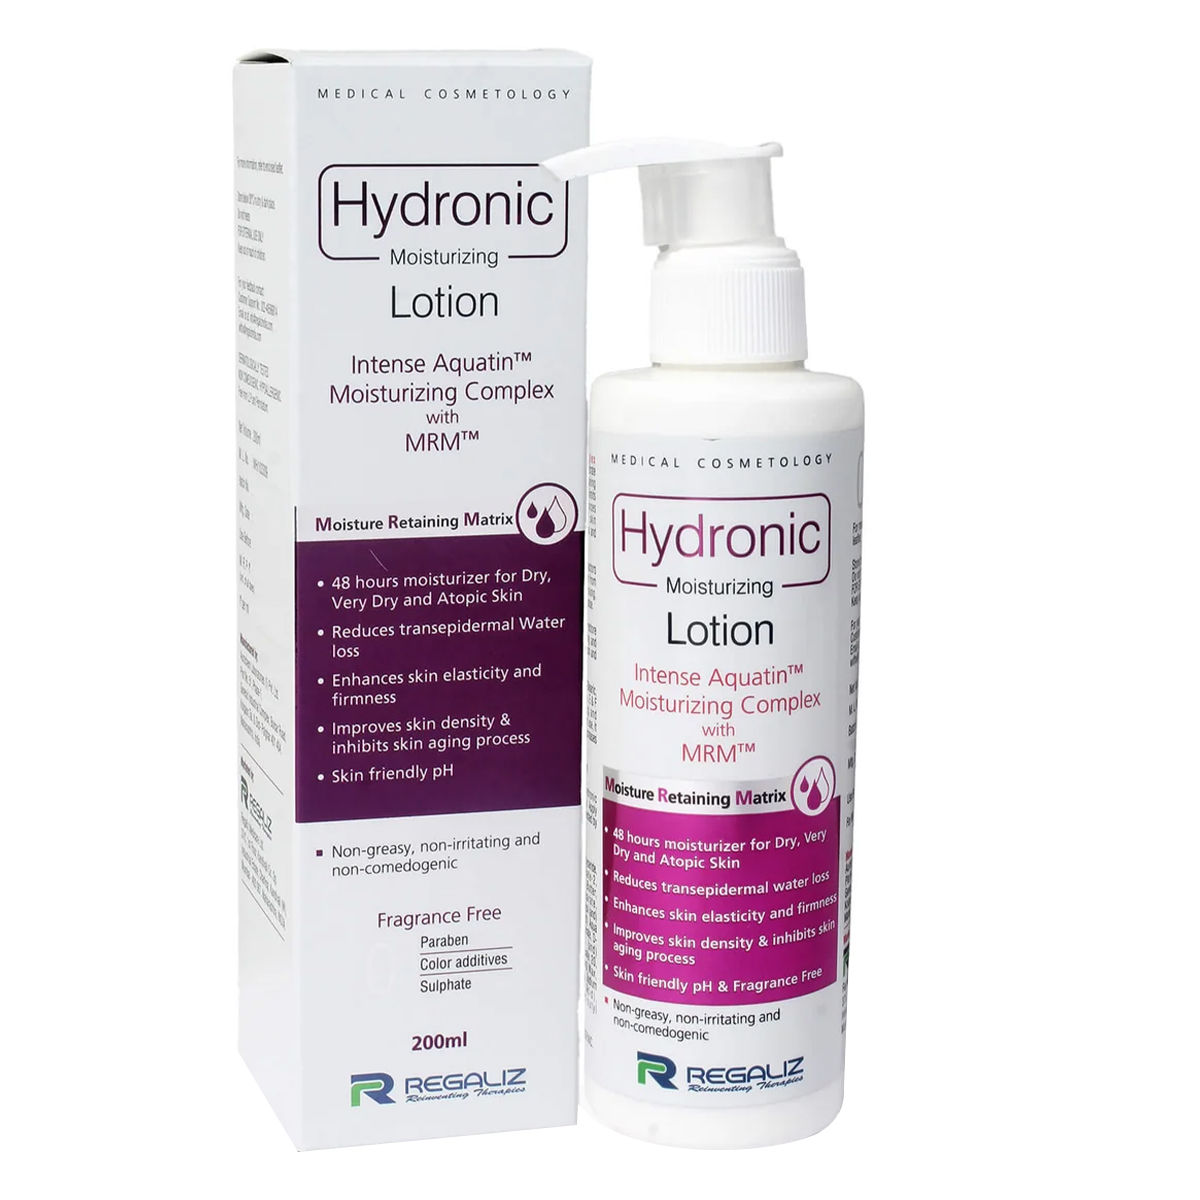 Hydronic Moisturizing Lotion | Uses, Benefits, Price | Apollo Pharmacy